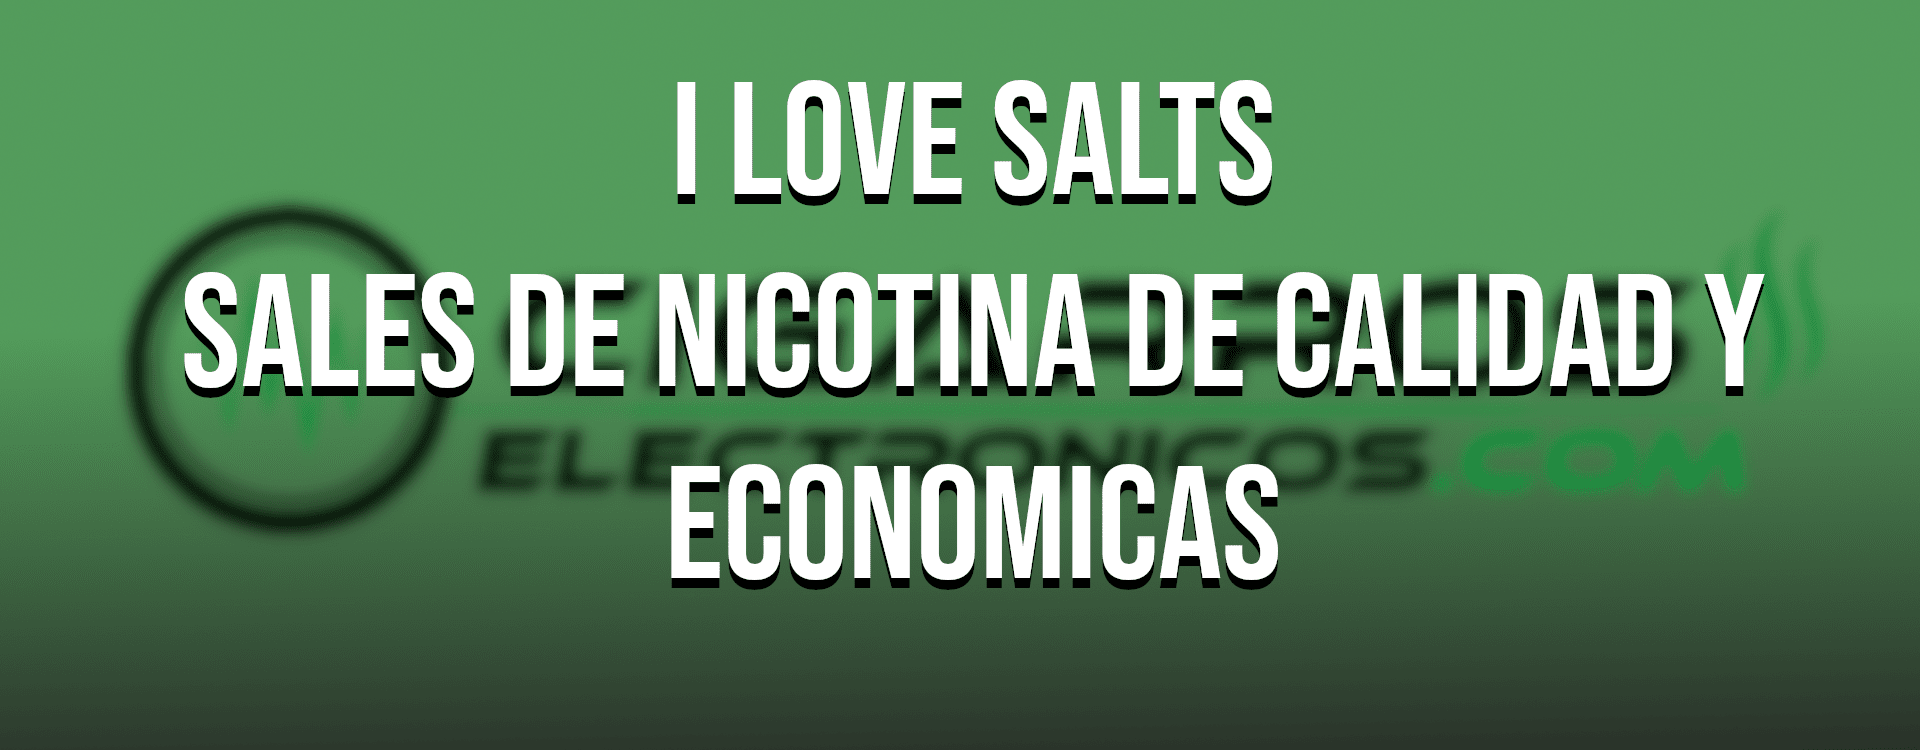 Sales de nicotina I Love Salts